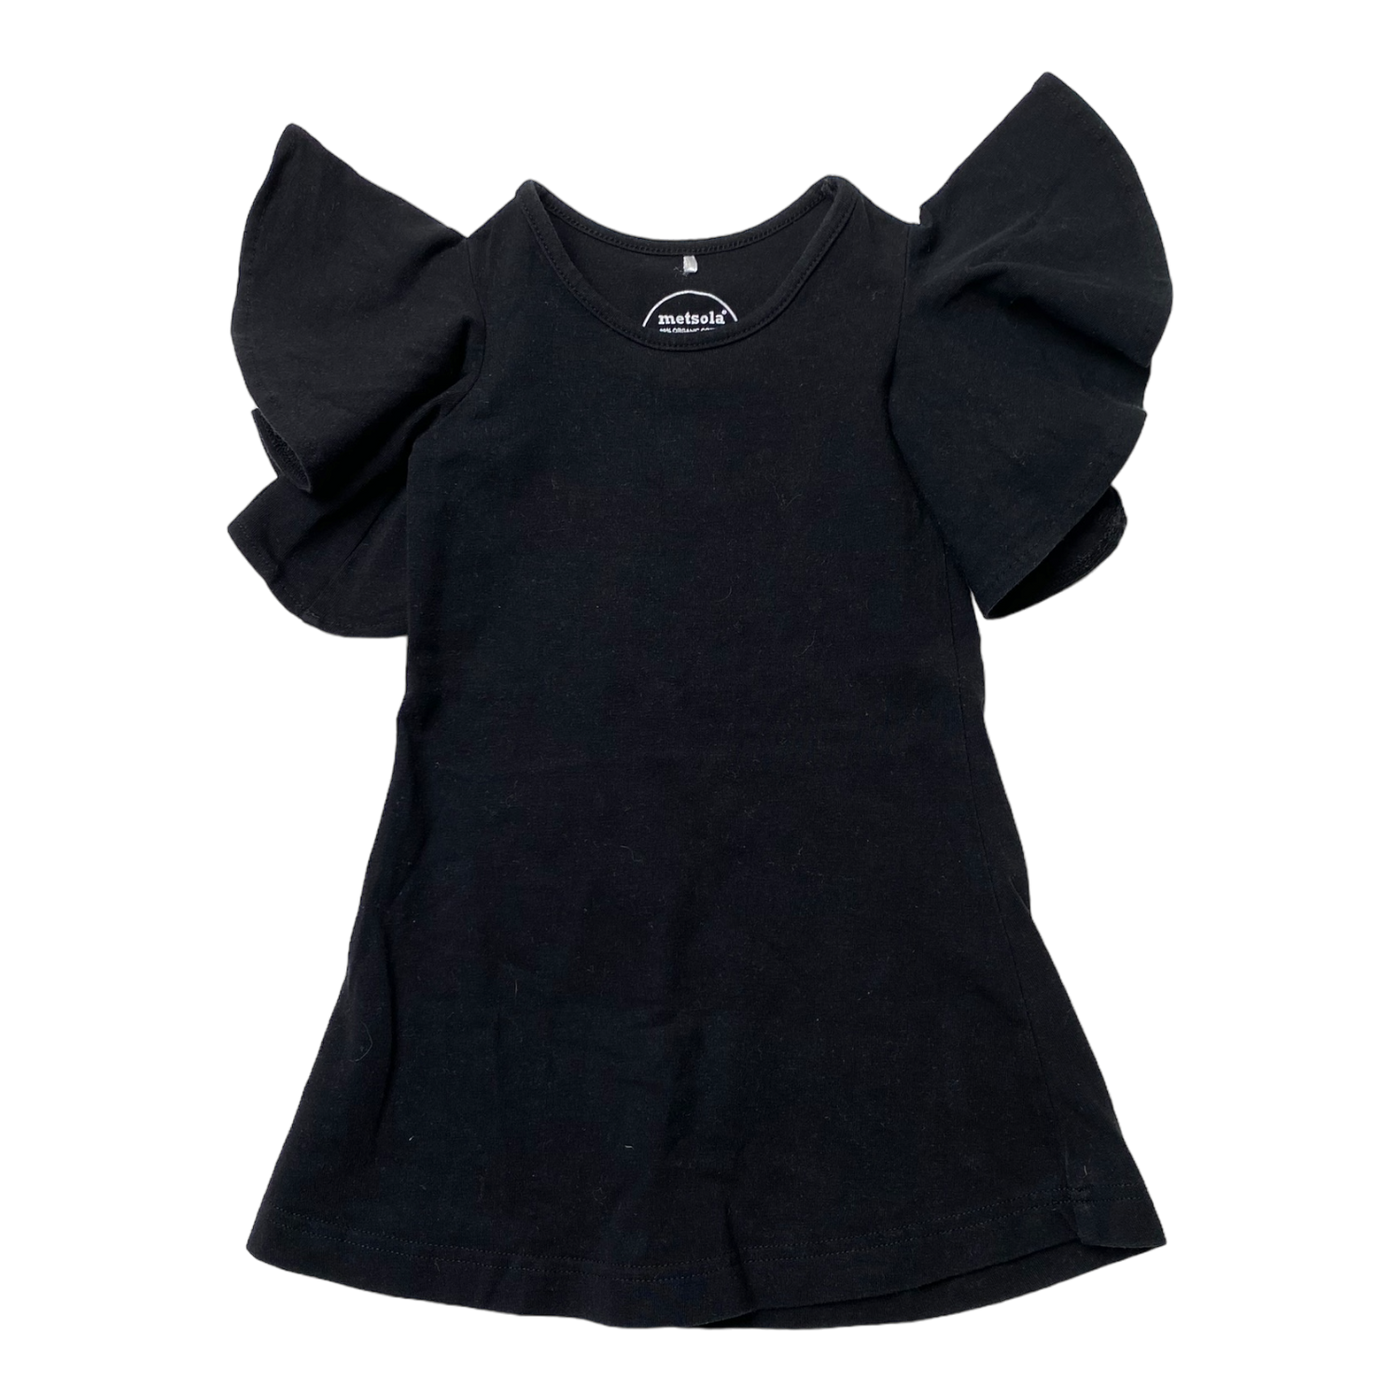 Metsola dress, black | 74/80cm